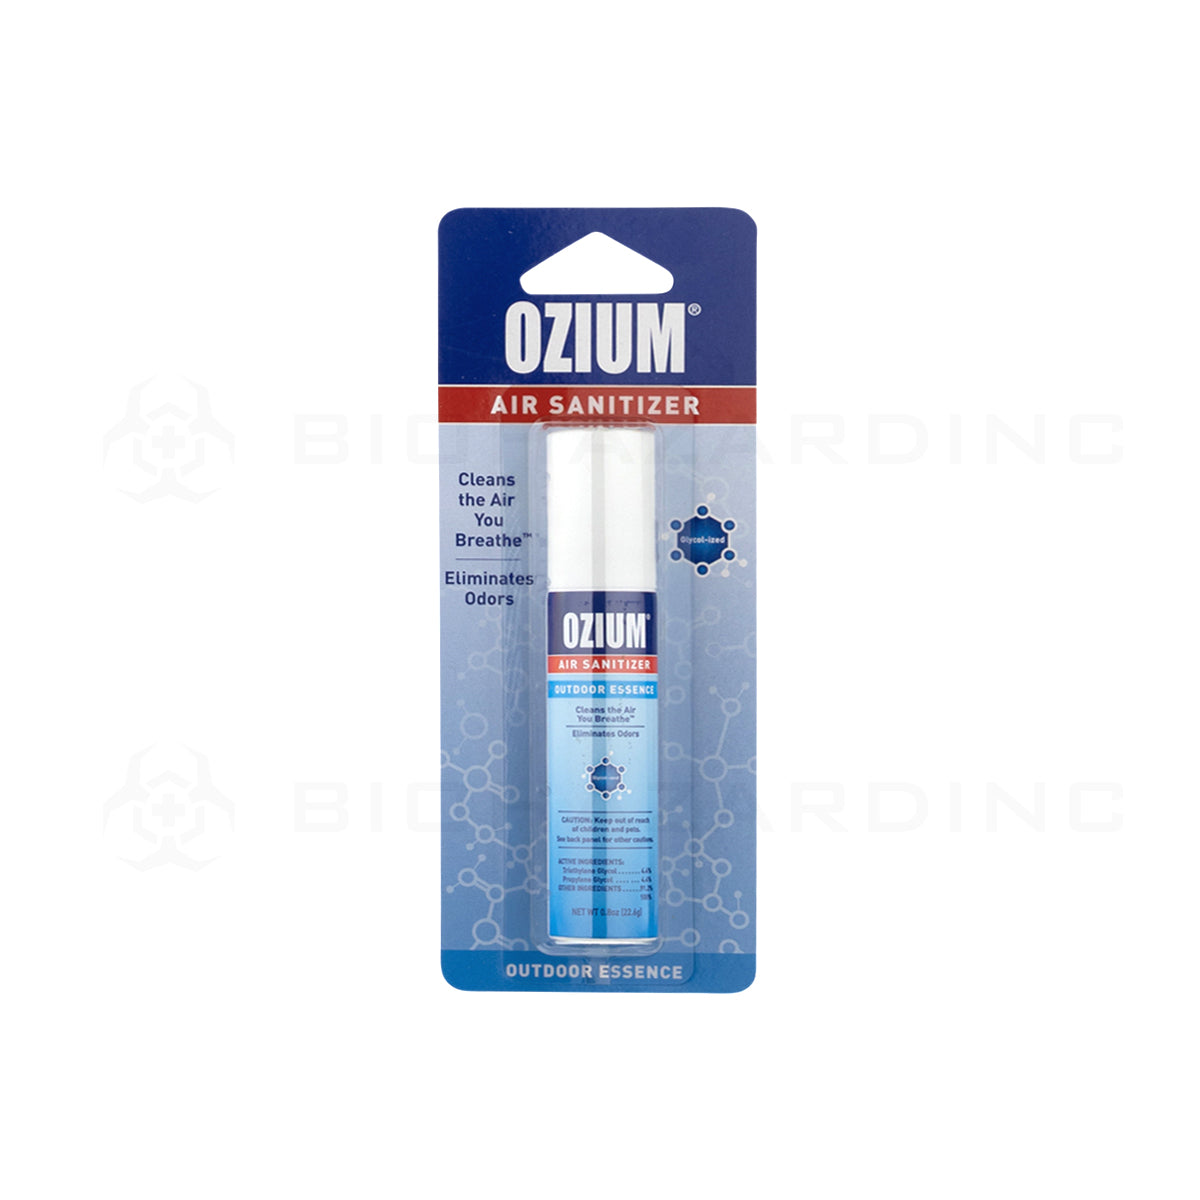 OZIUM® | Outdoor Essence Scent Air Sanitizer - Various Sizes Air Freshener Biohazard Inc 0.8 oz  